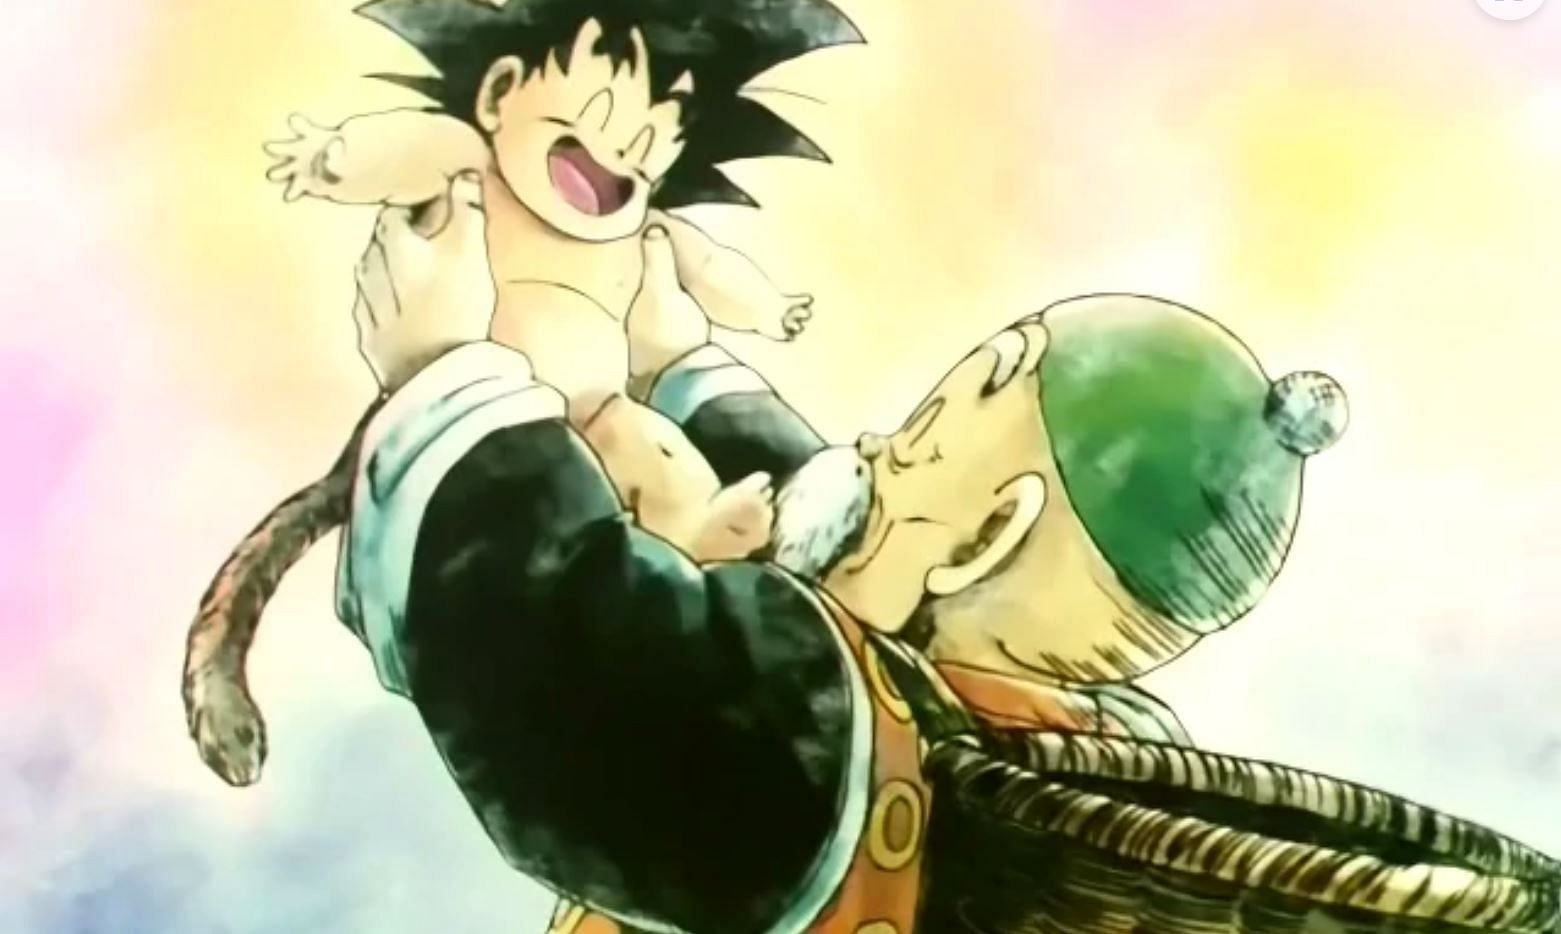 Goku and Grandpa Gohan reunite